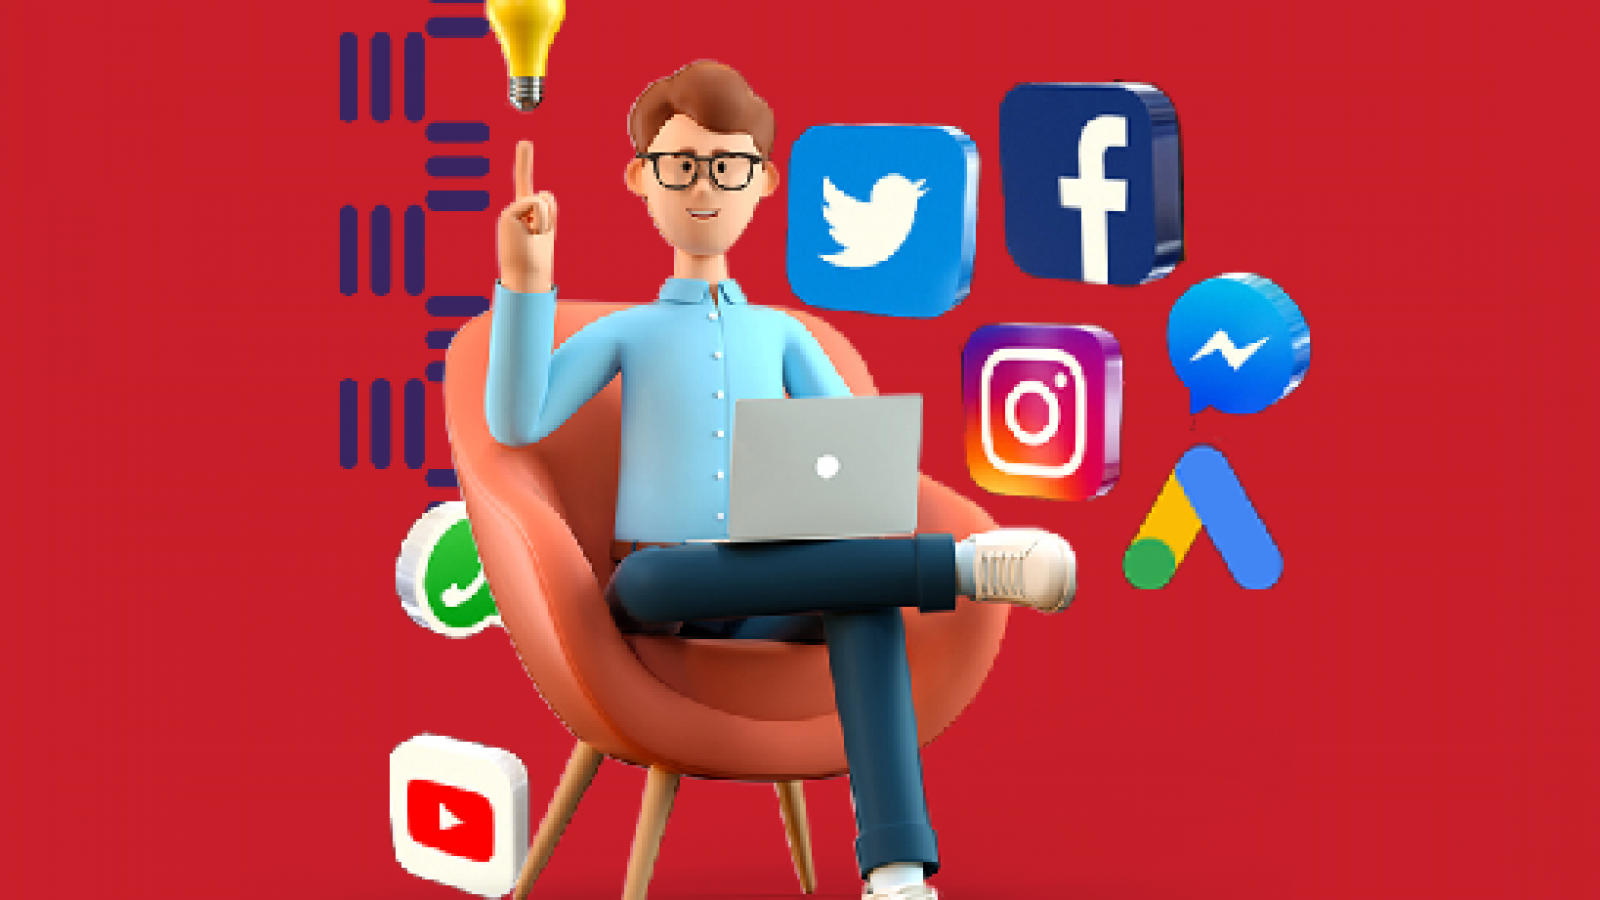 Marketing via sociale media platforms